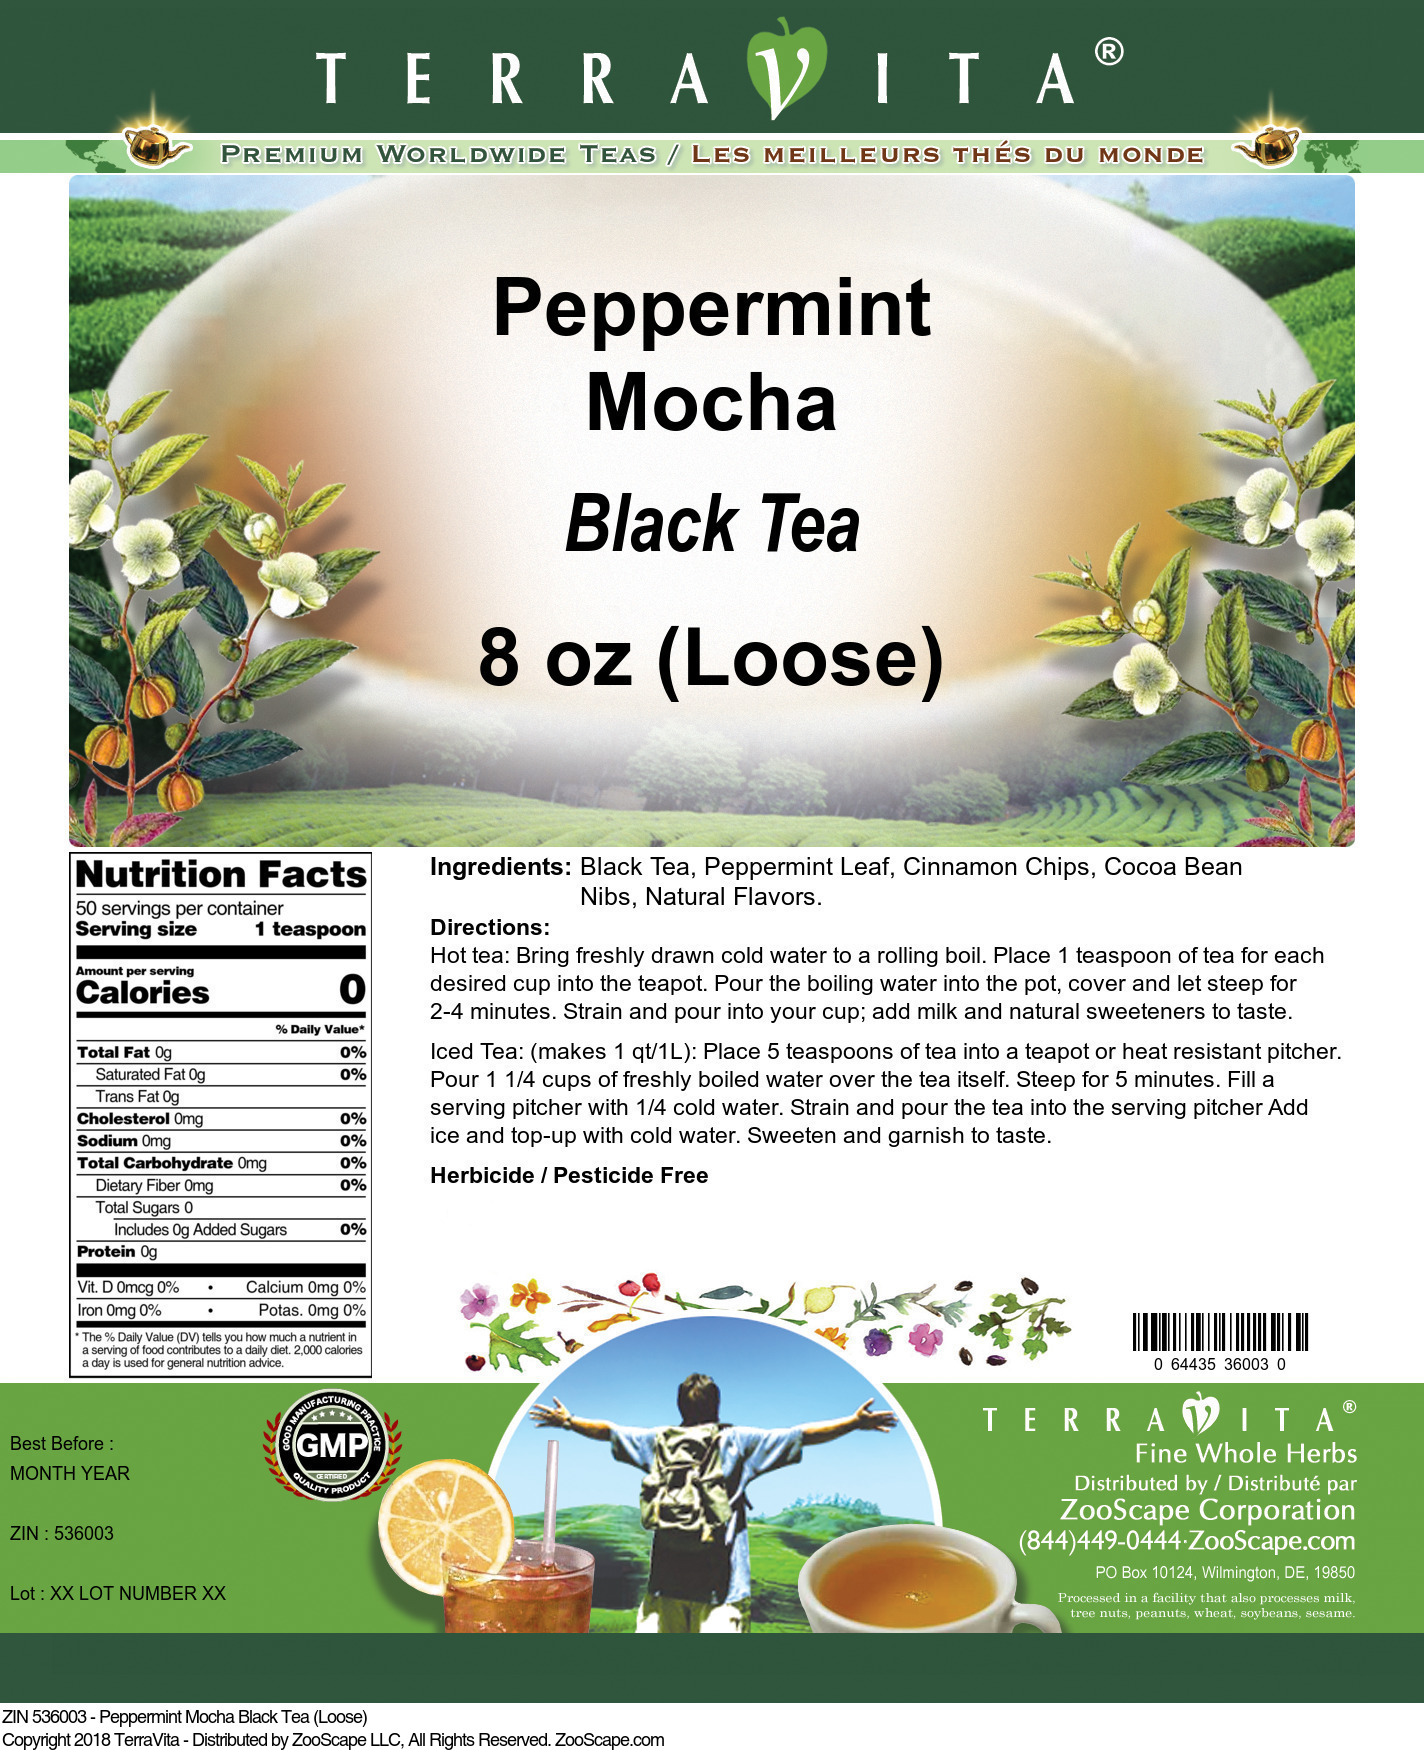 Peppermint Mocha Black Tea (Loose) - Label